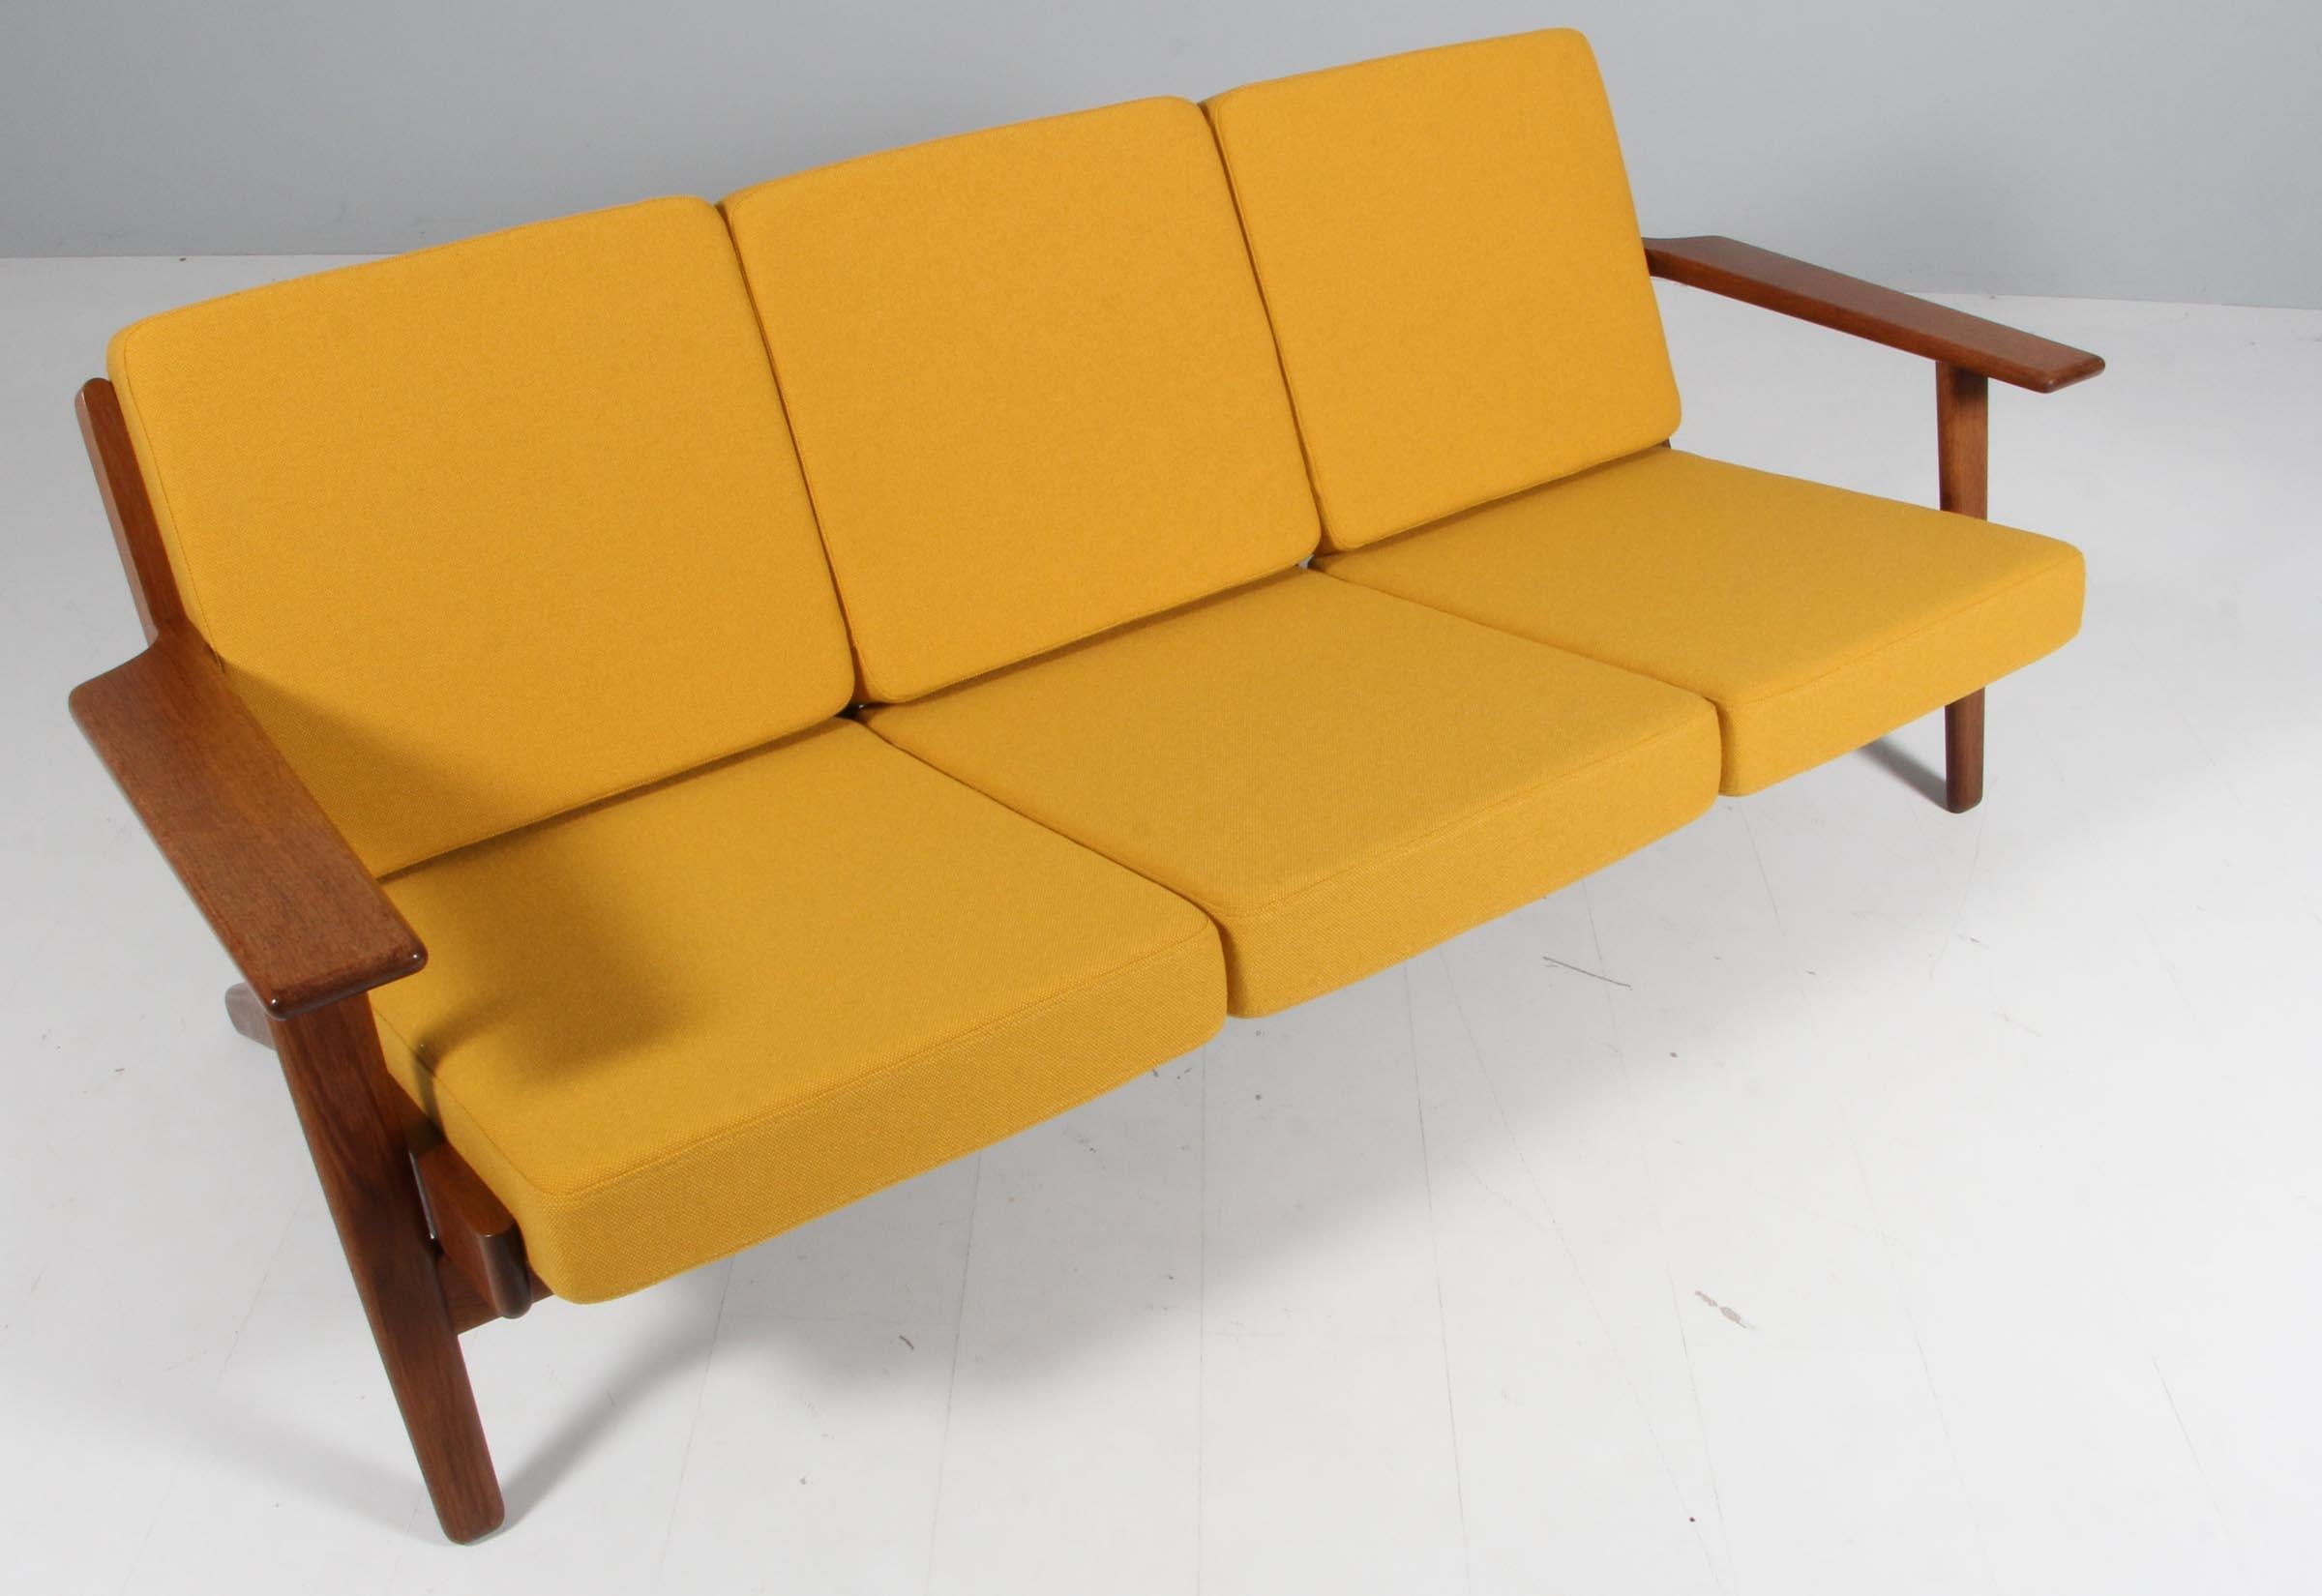 Hans J. Wegner three-seat sofa made of smoked oak.

New upholstered cushions with yellow fabric.

Model 290, made by GETAMA.

